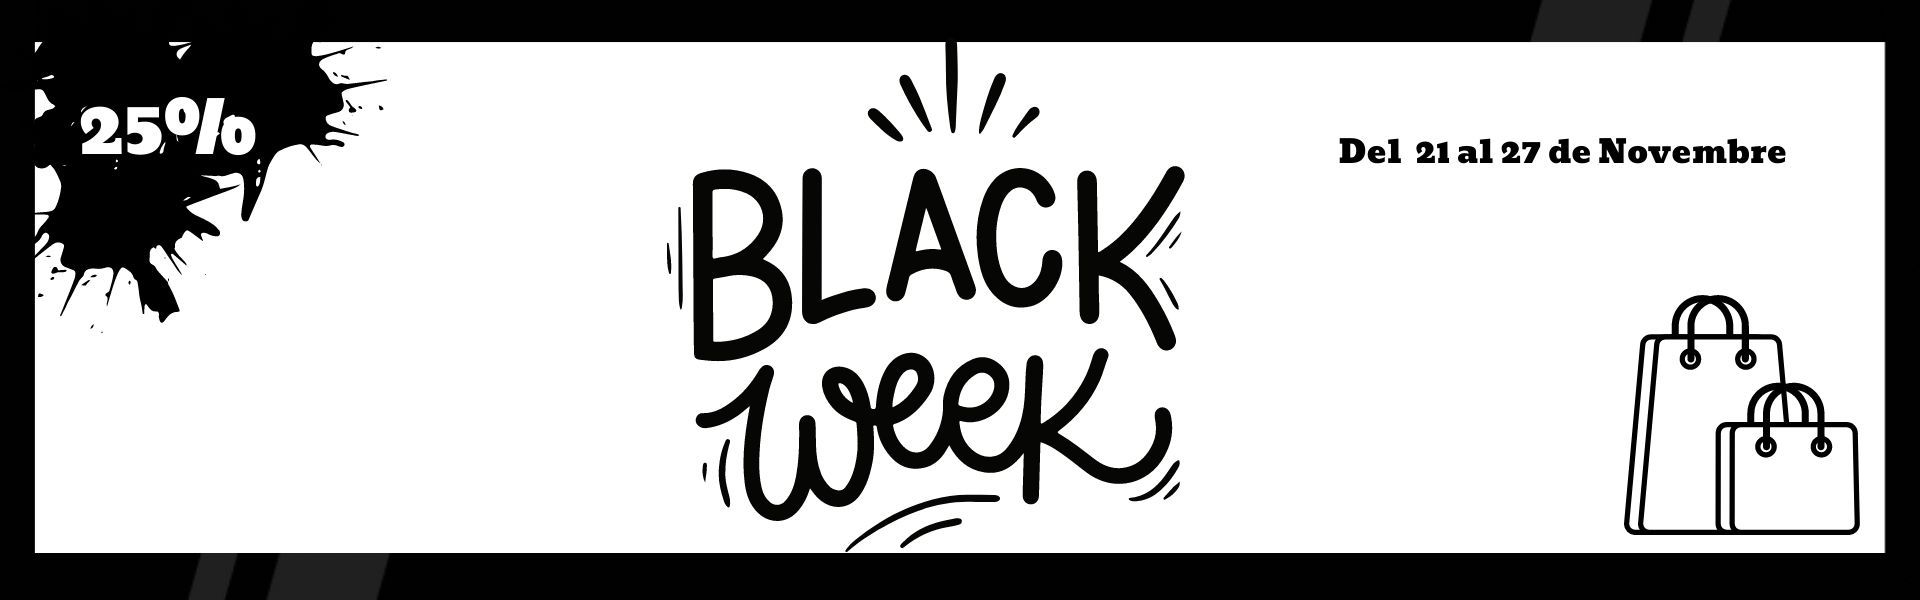 Black Week descuento black friday